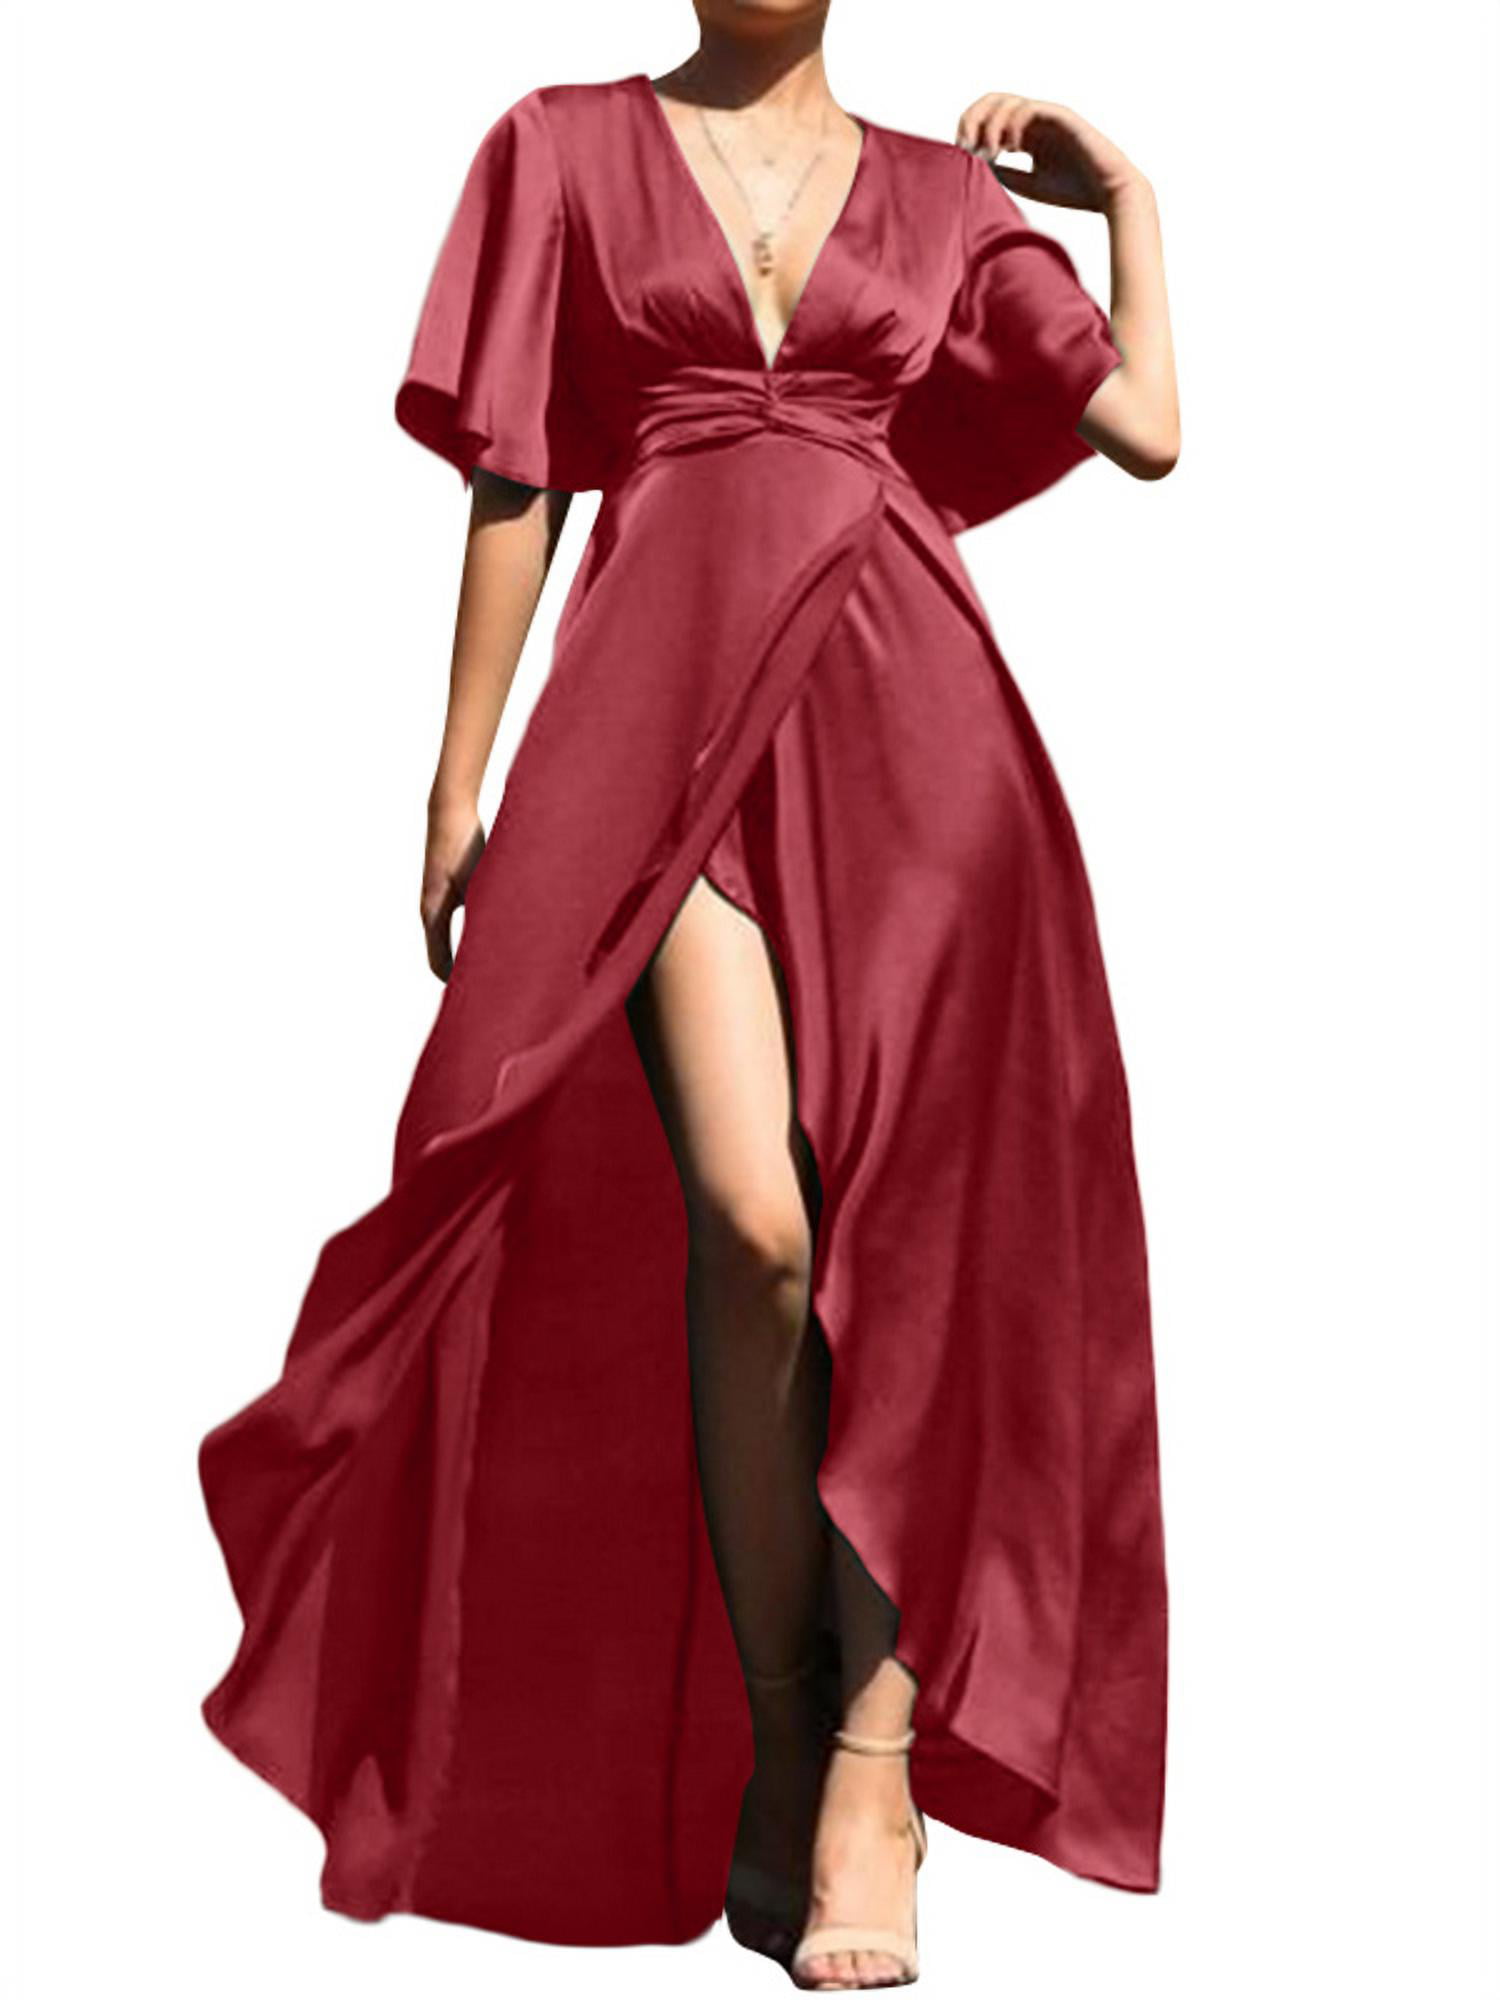 Leyorie Women Plus Size Dress V-Neck Wrap Short Sleeve Splicing Vintage Print Slim Elegant Dresses